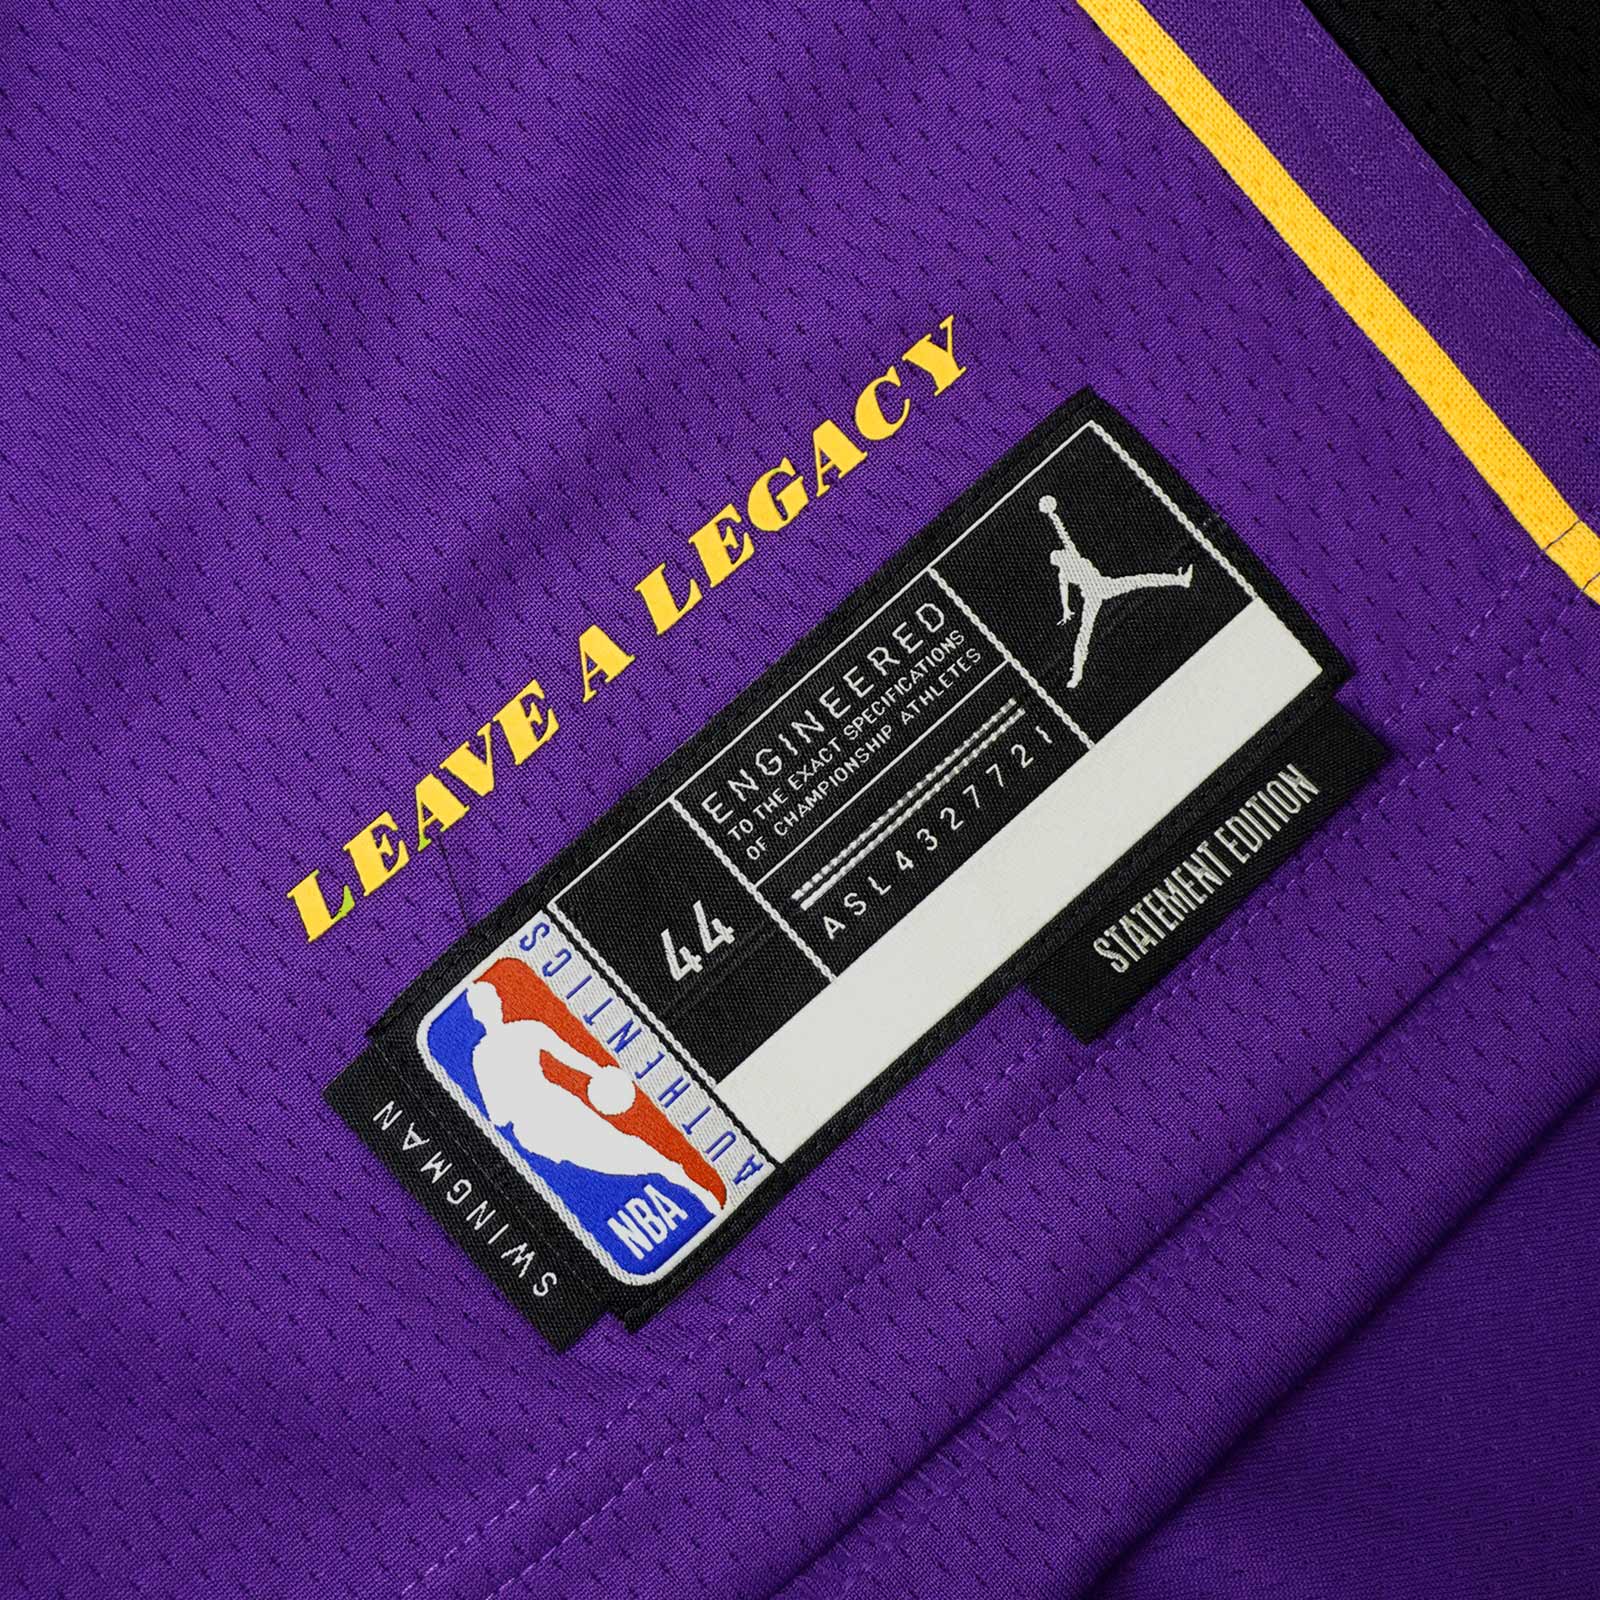 Los Angeles Lakers Statement Edition Jordan Dri-FIT NBA Swingman Jersey.